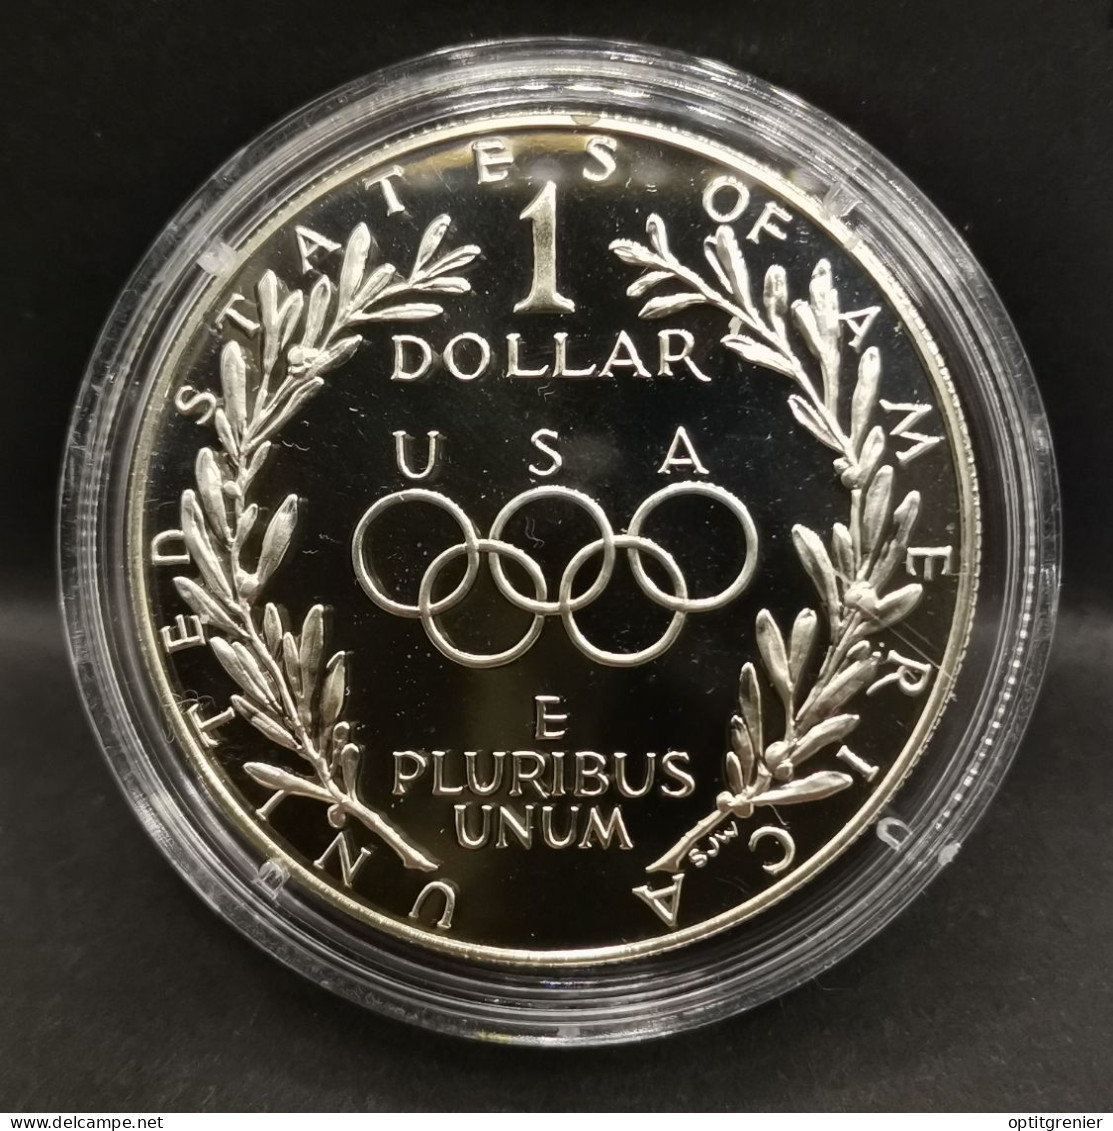 1 DOLLAR BE ARGENT 1988 S OLYMPIADES JO USA / PROOF SILVER - Zonder Classificatie